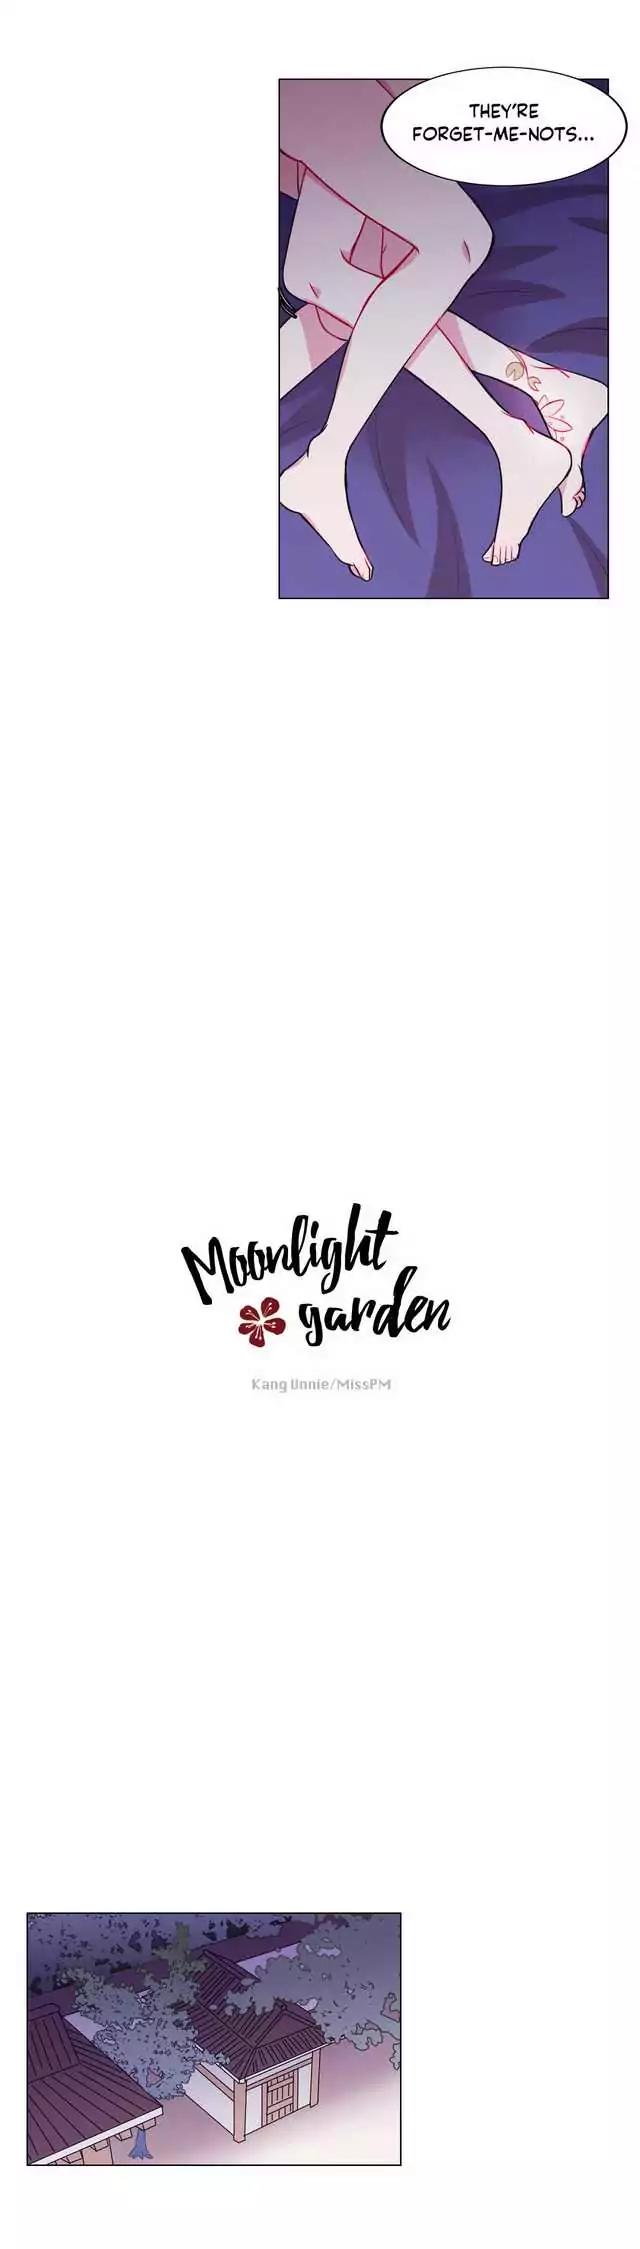 Moonlight Garden image